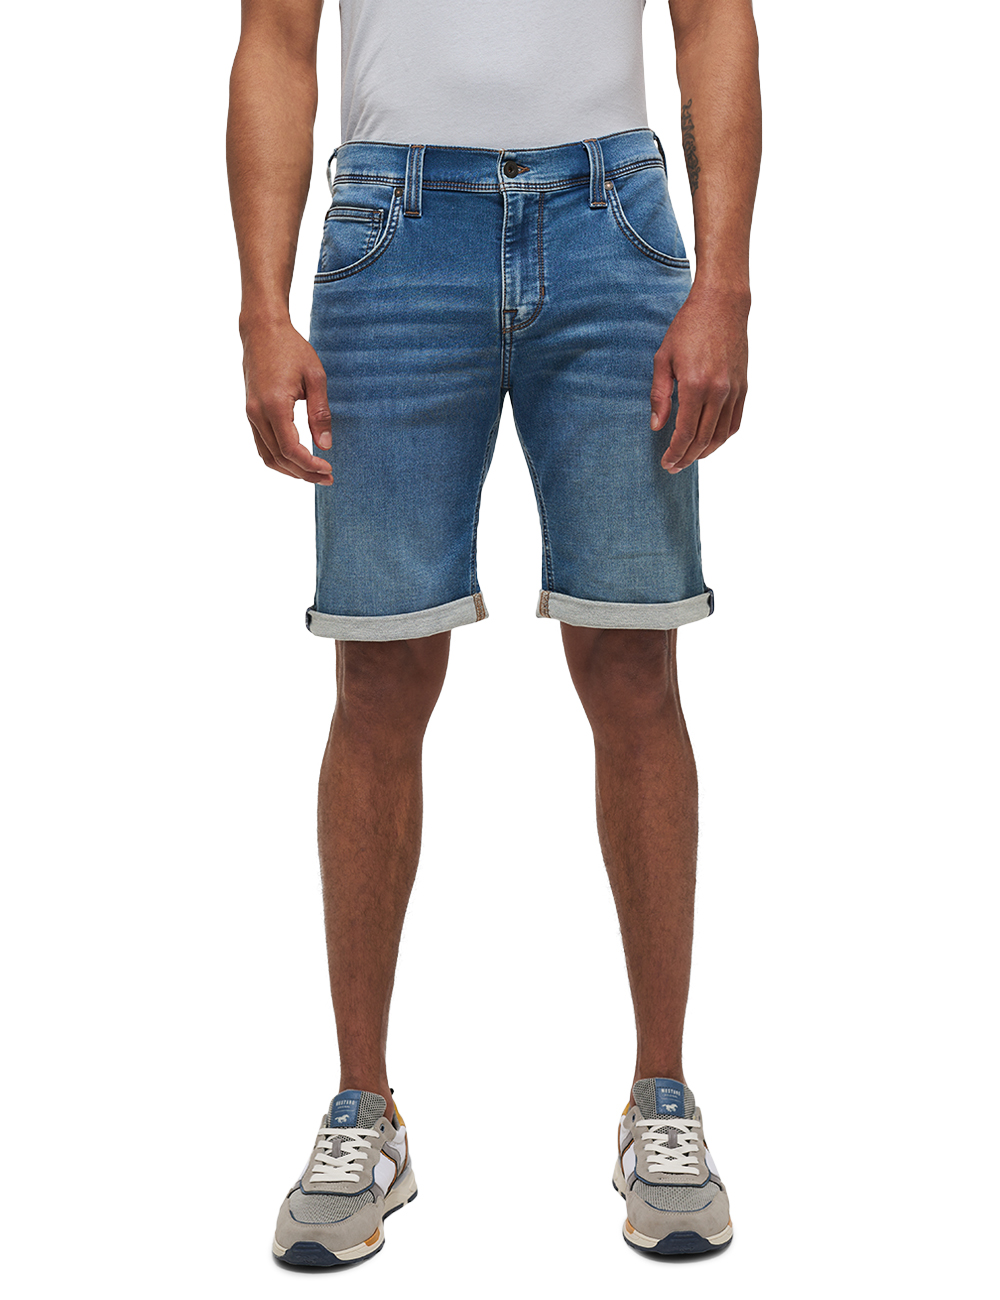 Jeans Shorts - shoppen online aktuelle jetzt Modetrends